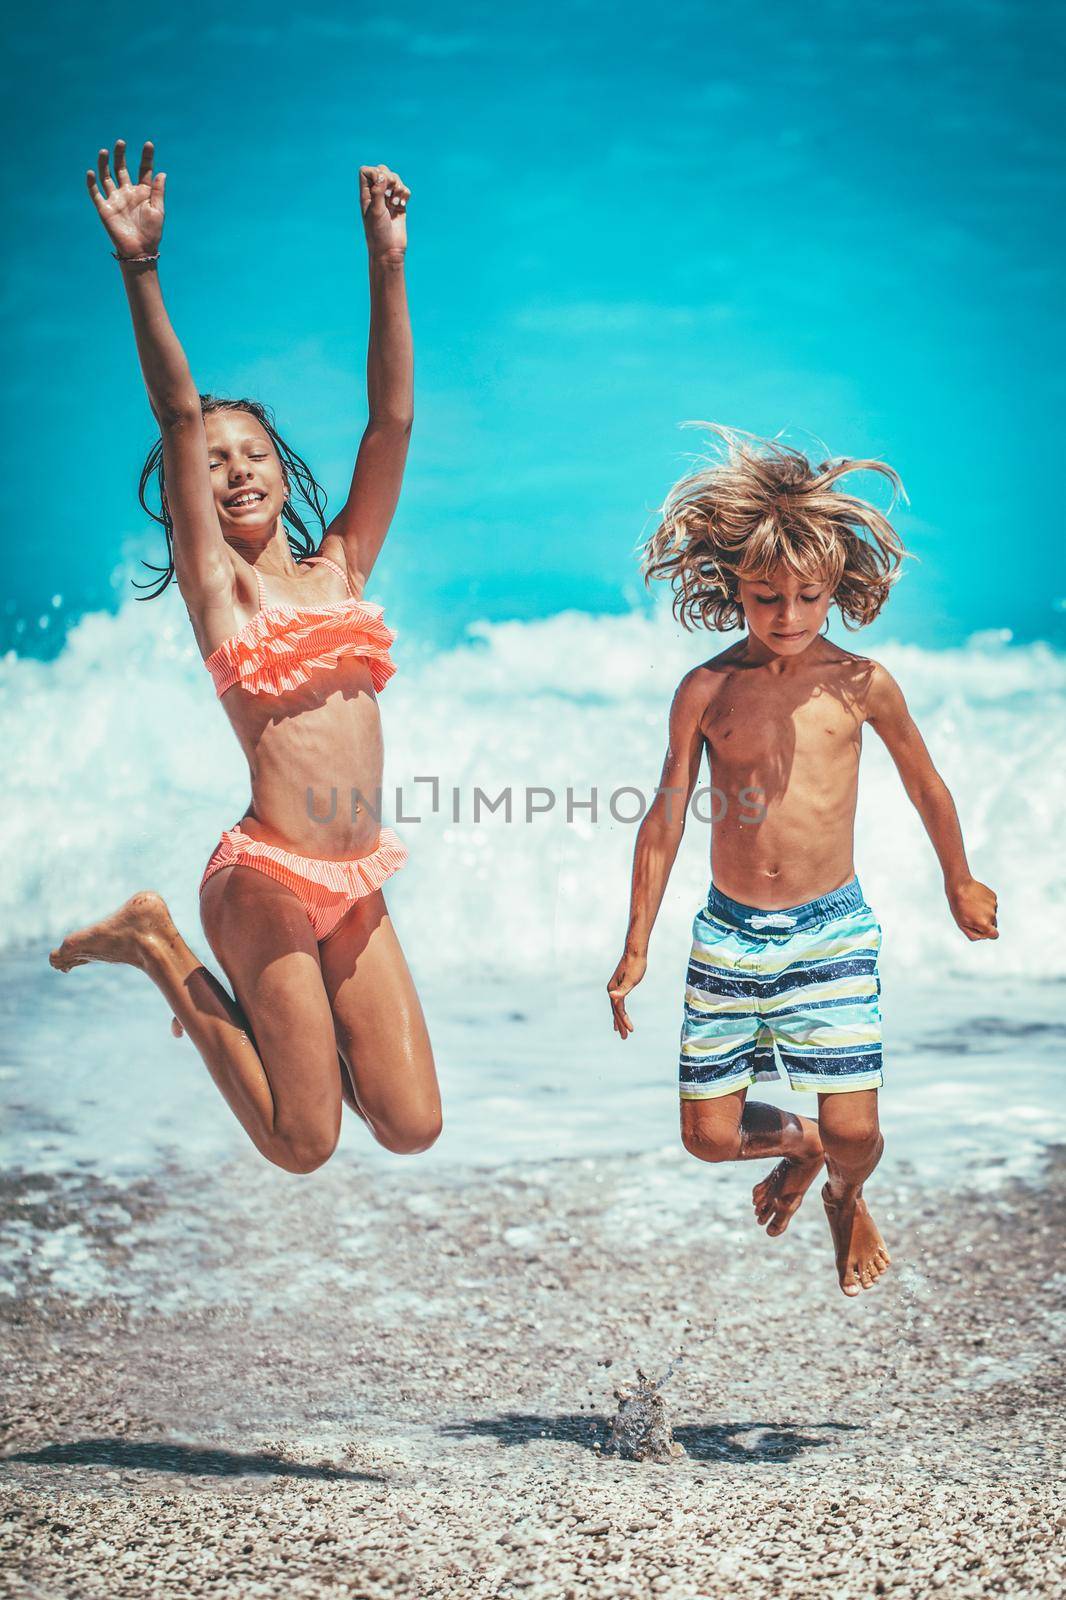 Kids Fun On The Beach by MilanMarkovic78